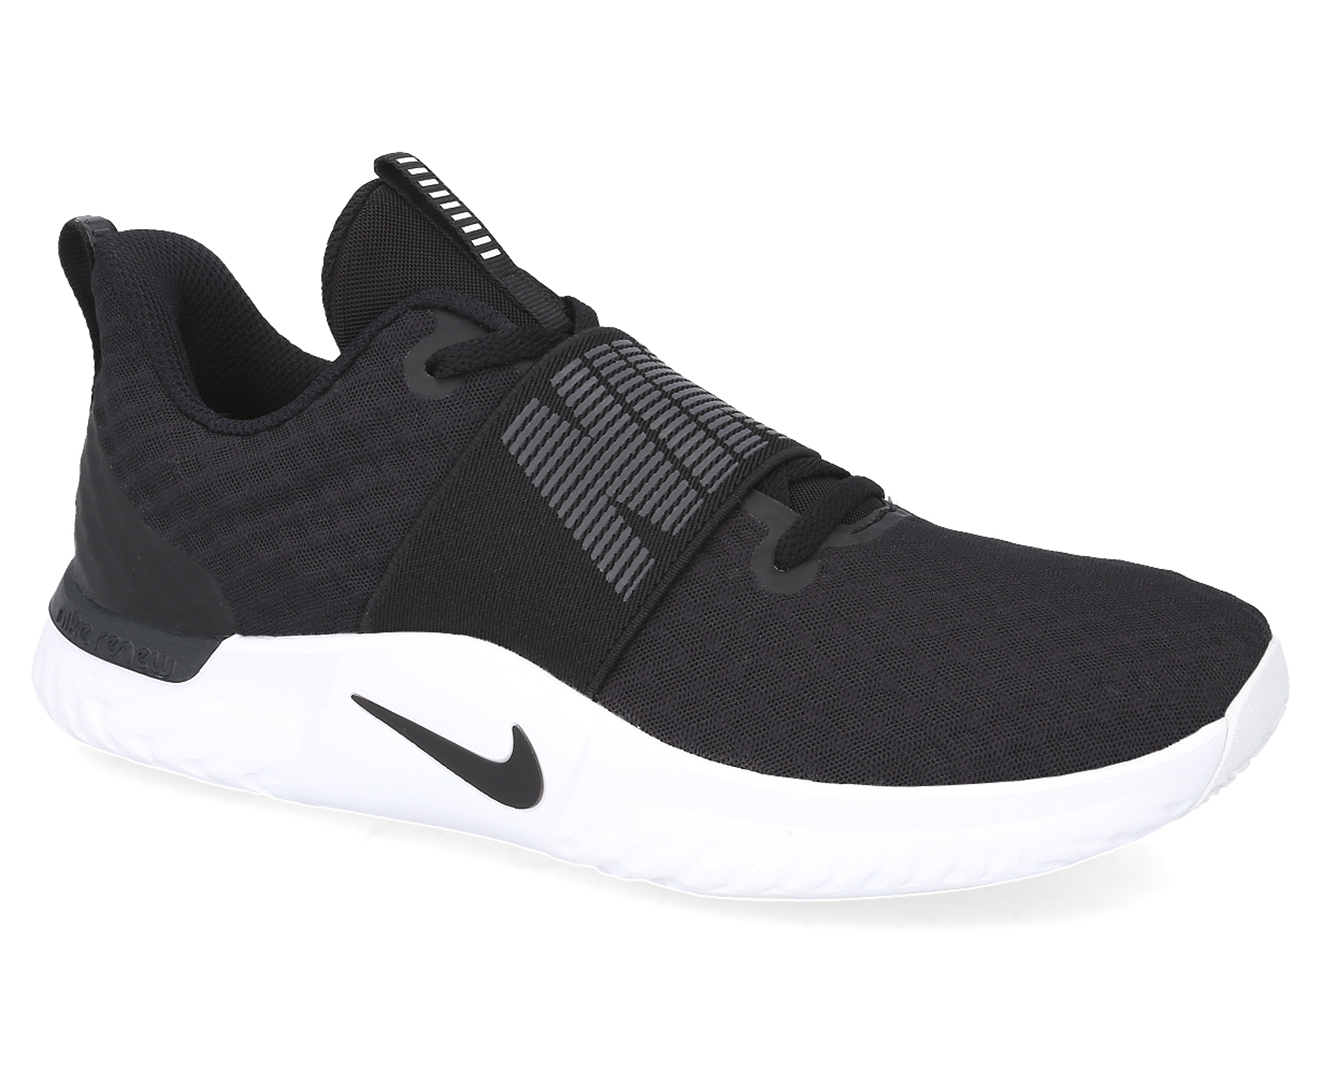 Nike Women's Renew In-Season TR 9 Training Shoes - Black/Anthracite/White | Catch.com.au